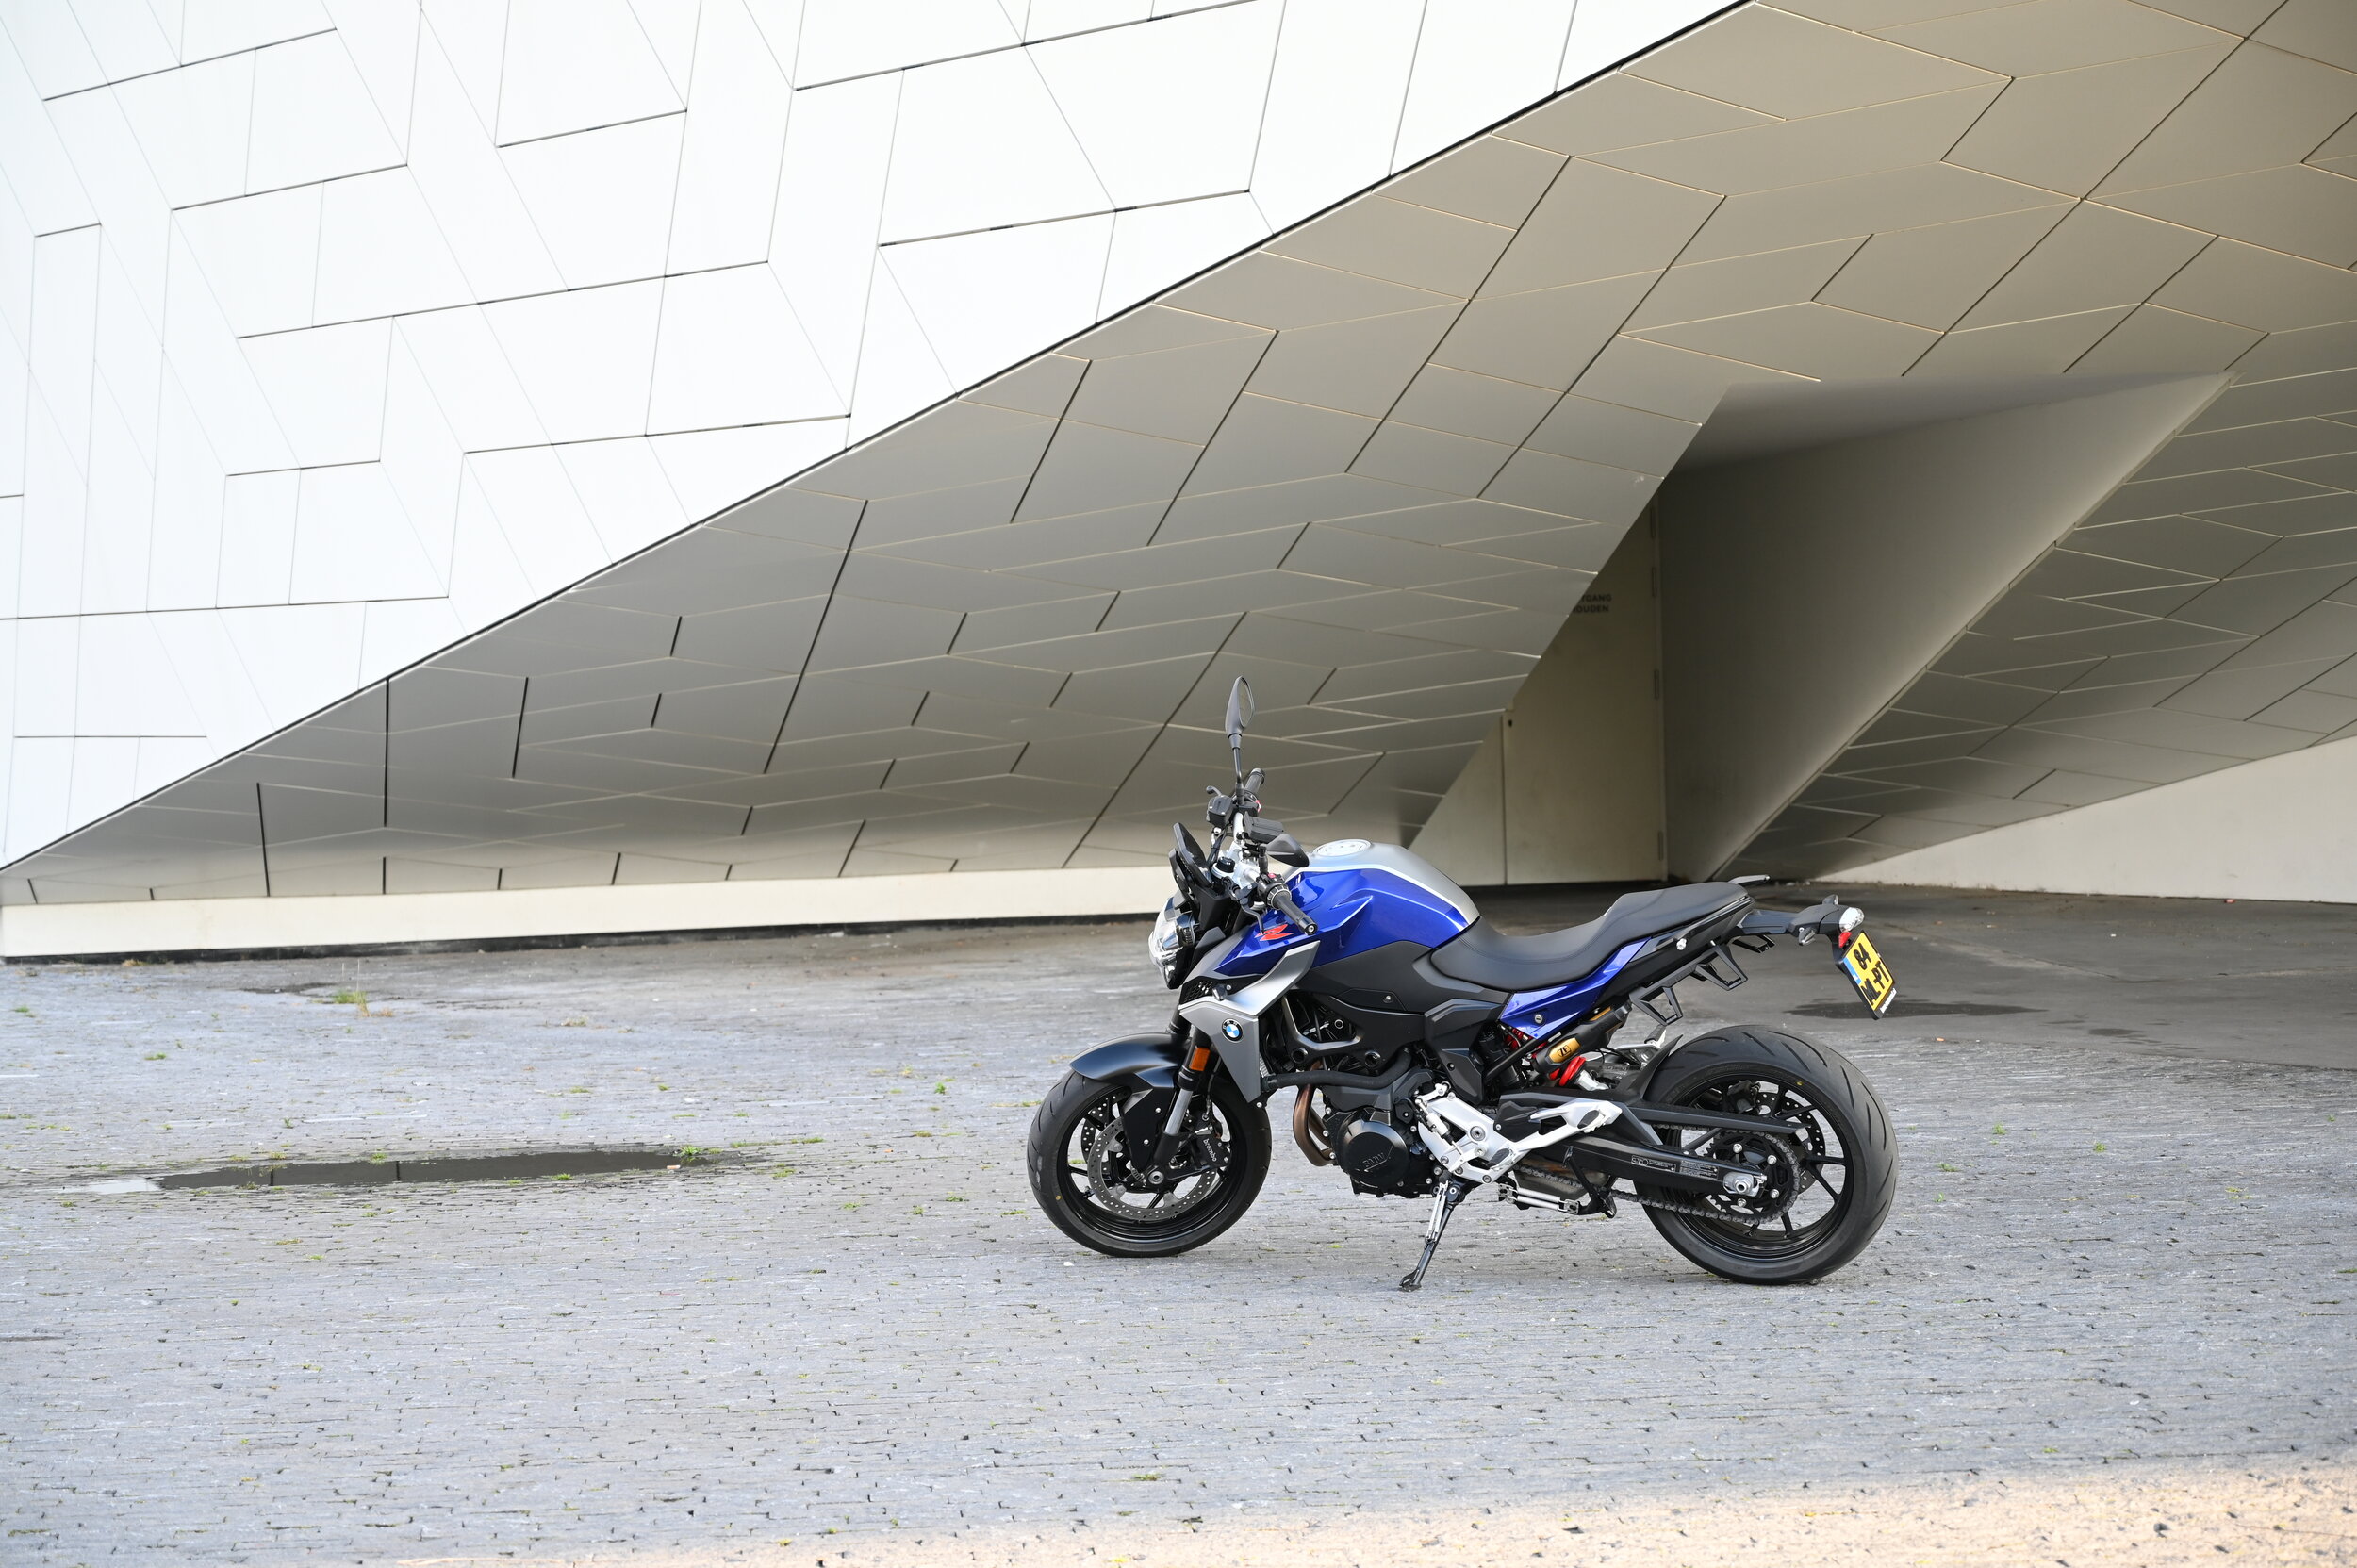 the fast looking BMW motorbike — Kayvan Dam